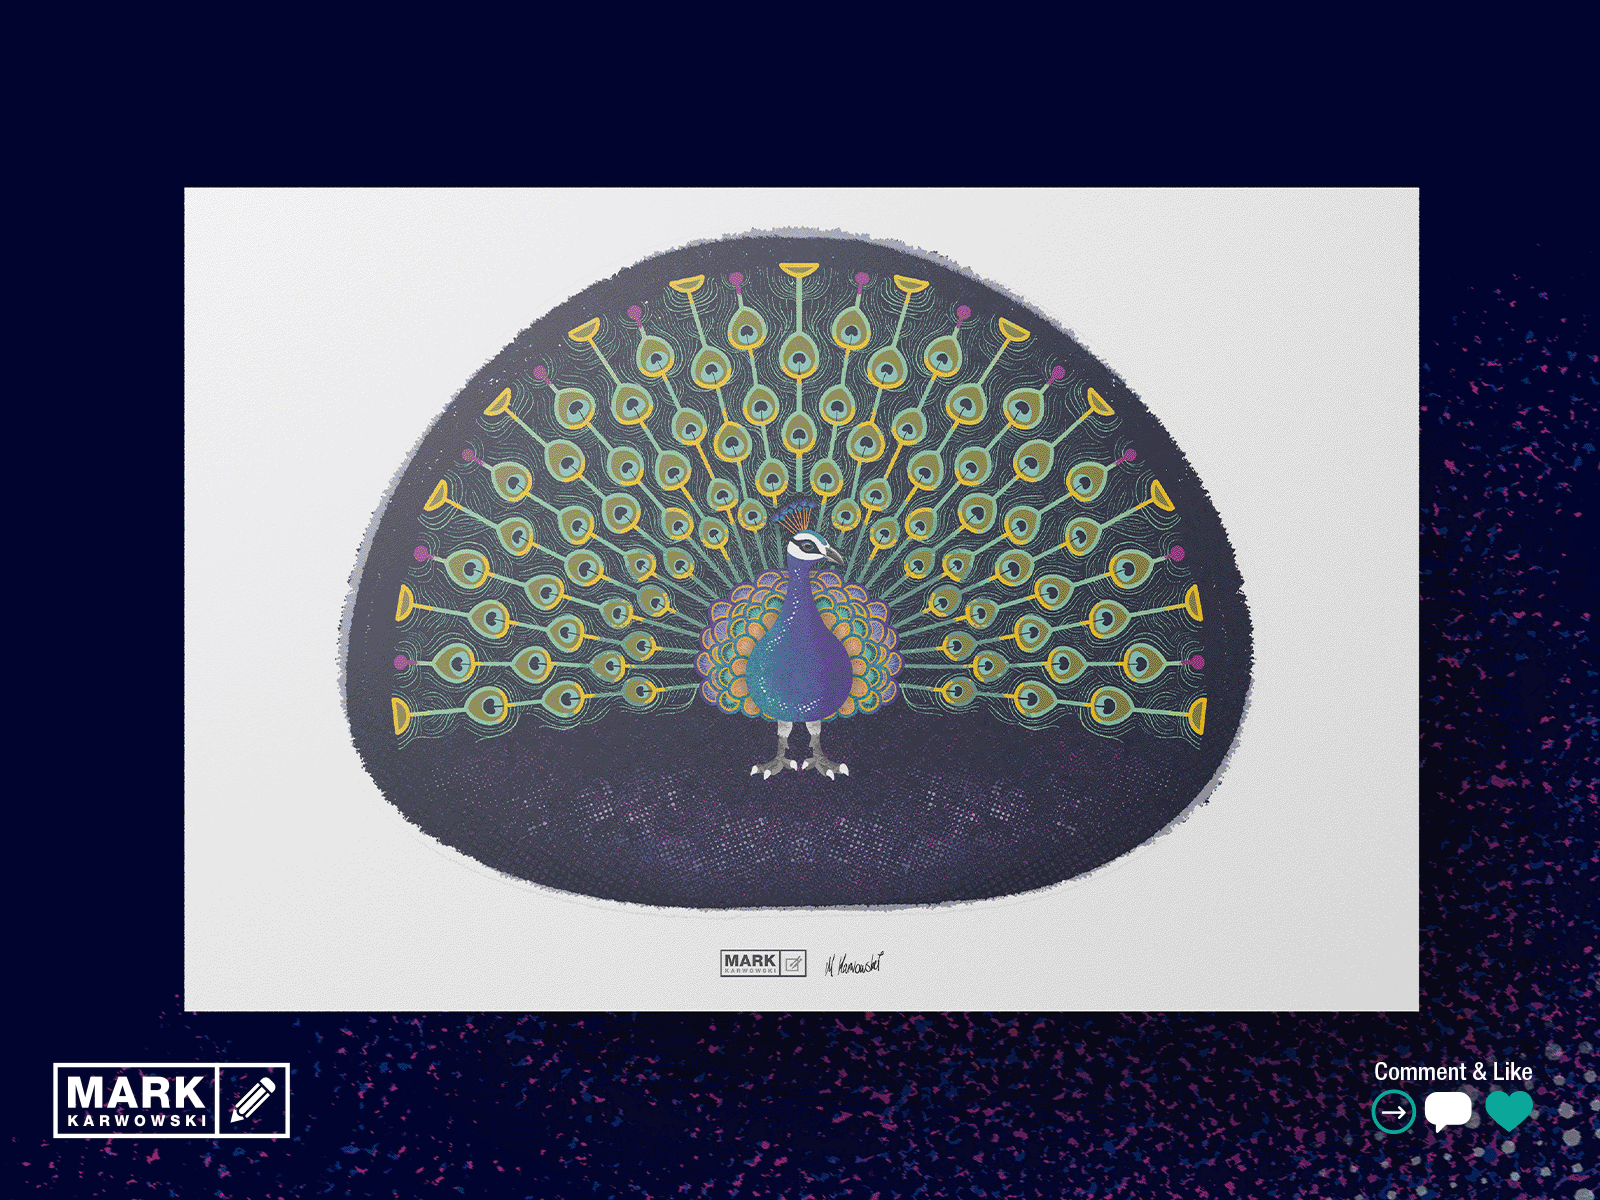 Peacock Illustration - Birds of a Feather apple pencil artwork creative design digital art illustration inspiration inspire ipad pro procreate